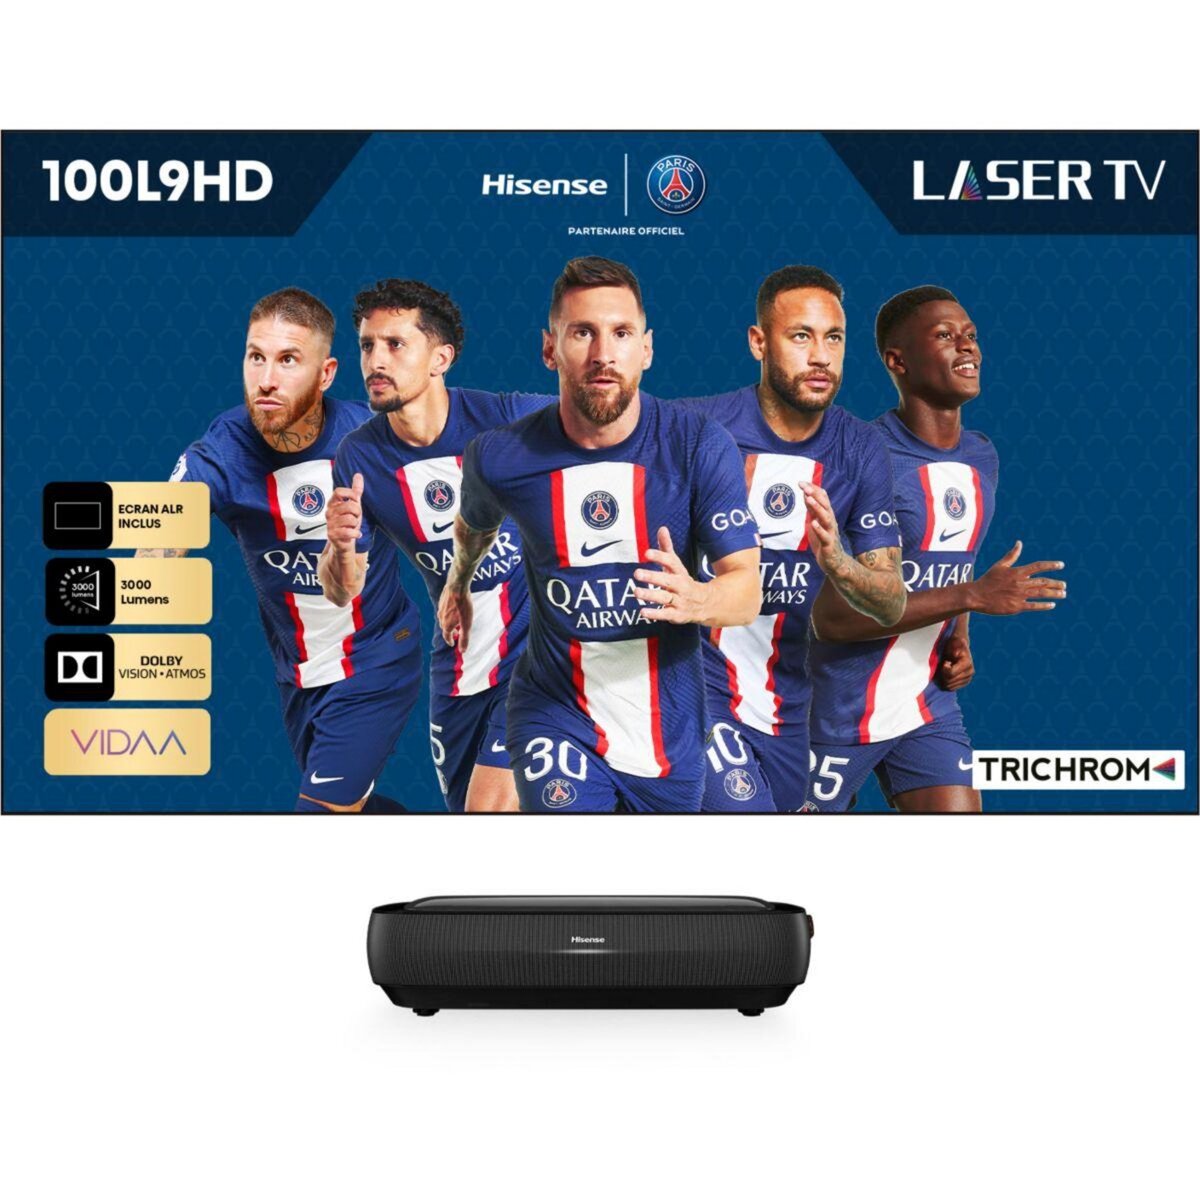 Hisense Vidéoprojecteur home cinéma 100L9HD Laser TV + écran ALR FRESNEL